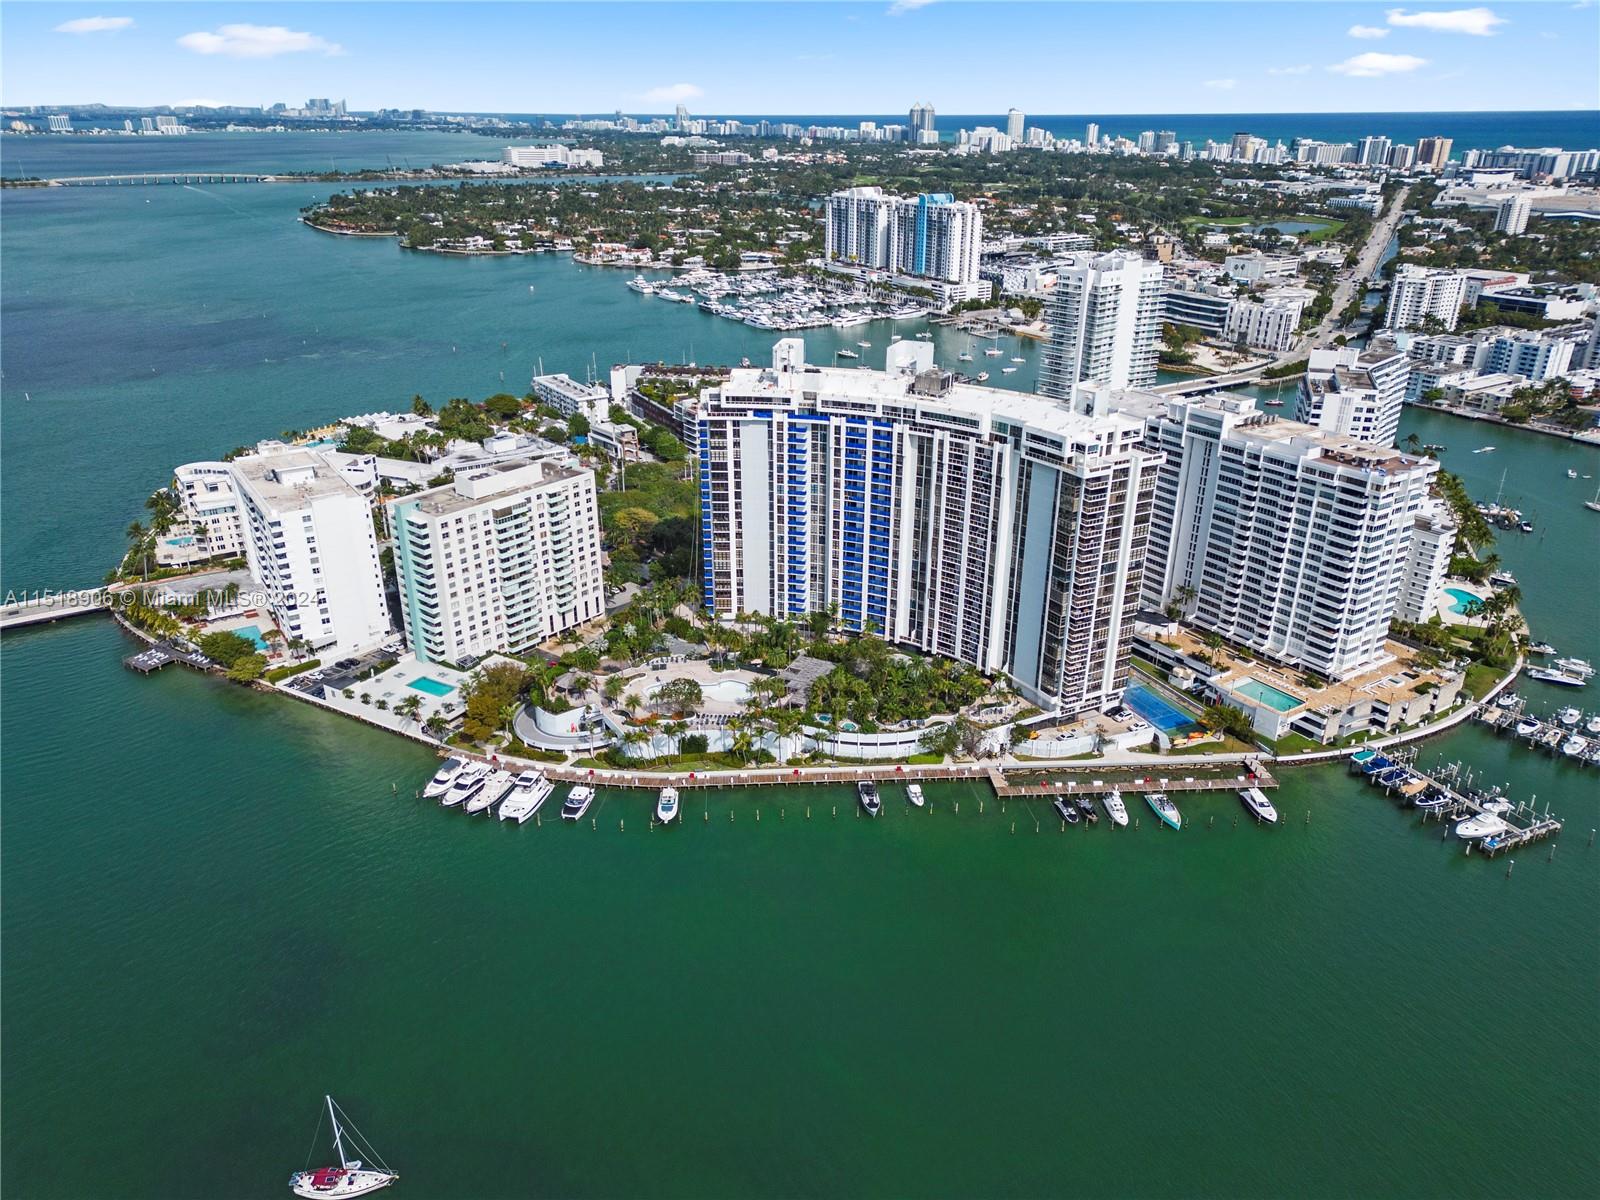 Property for Sale at 9 Island Ave 610, Miami Beach, Miami-Dade County, Florida - Bedrooms: 2 
Bathrooms: 2  - $974,900